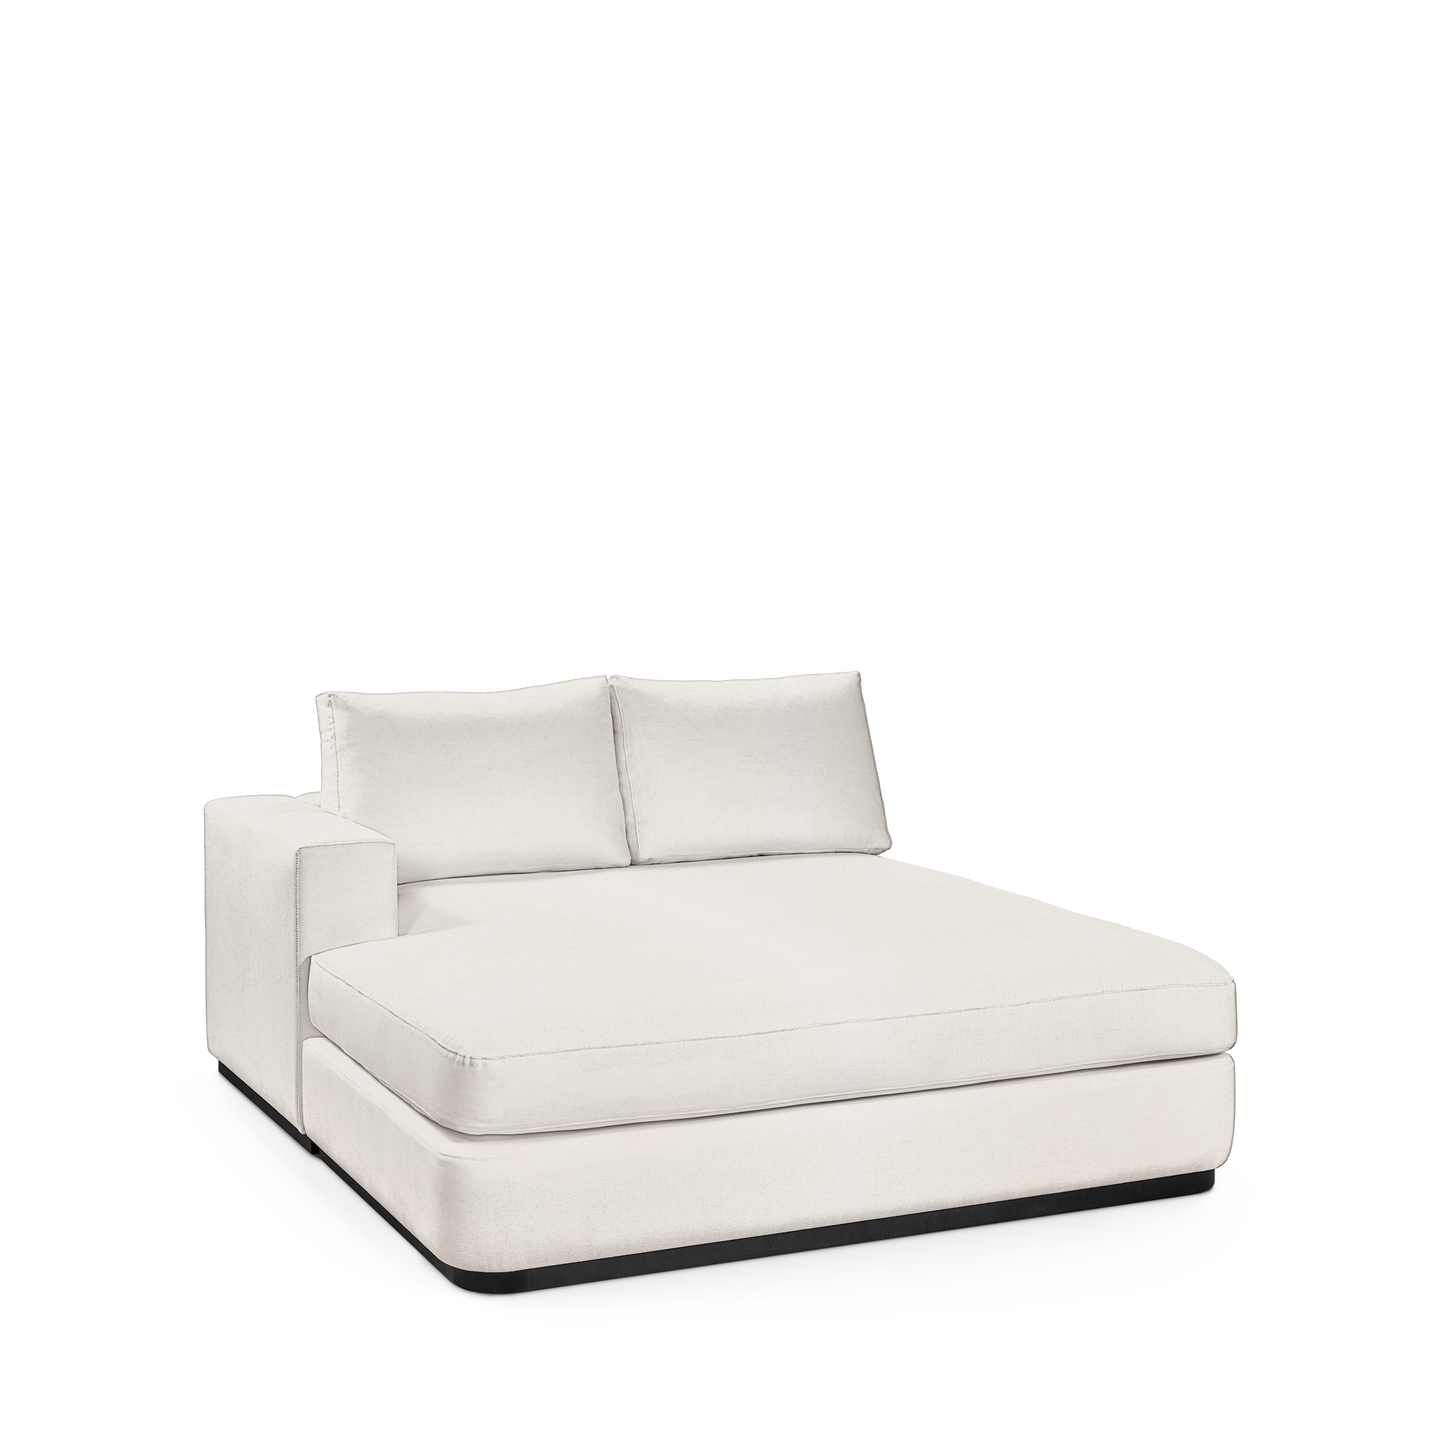 ATLAS 160 Lounge Bed arm rest left with bolt white textile